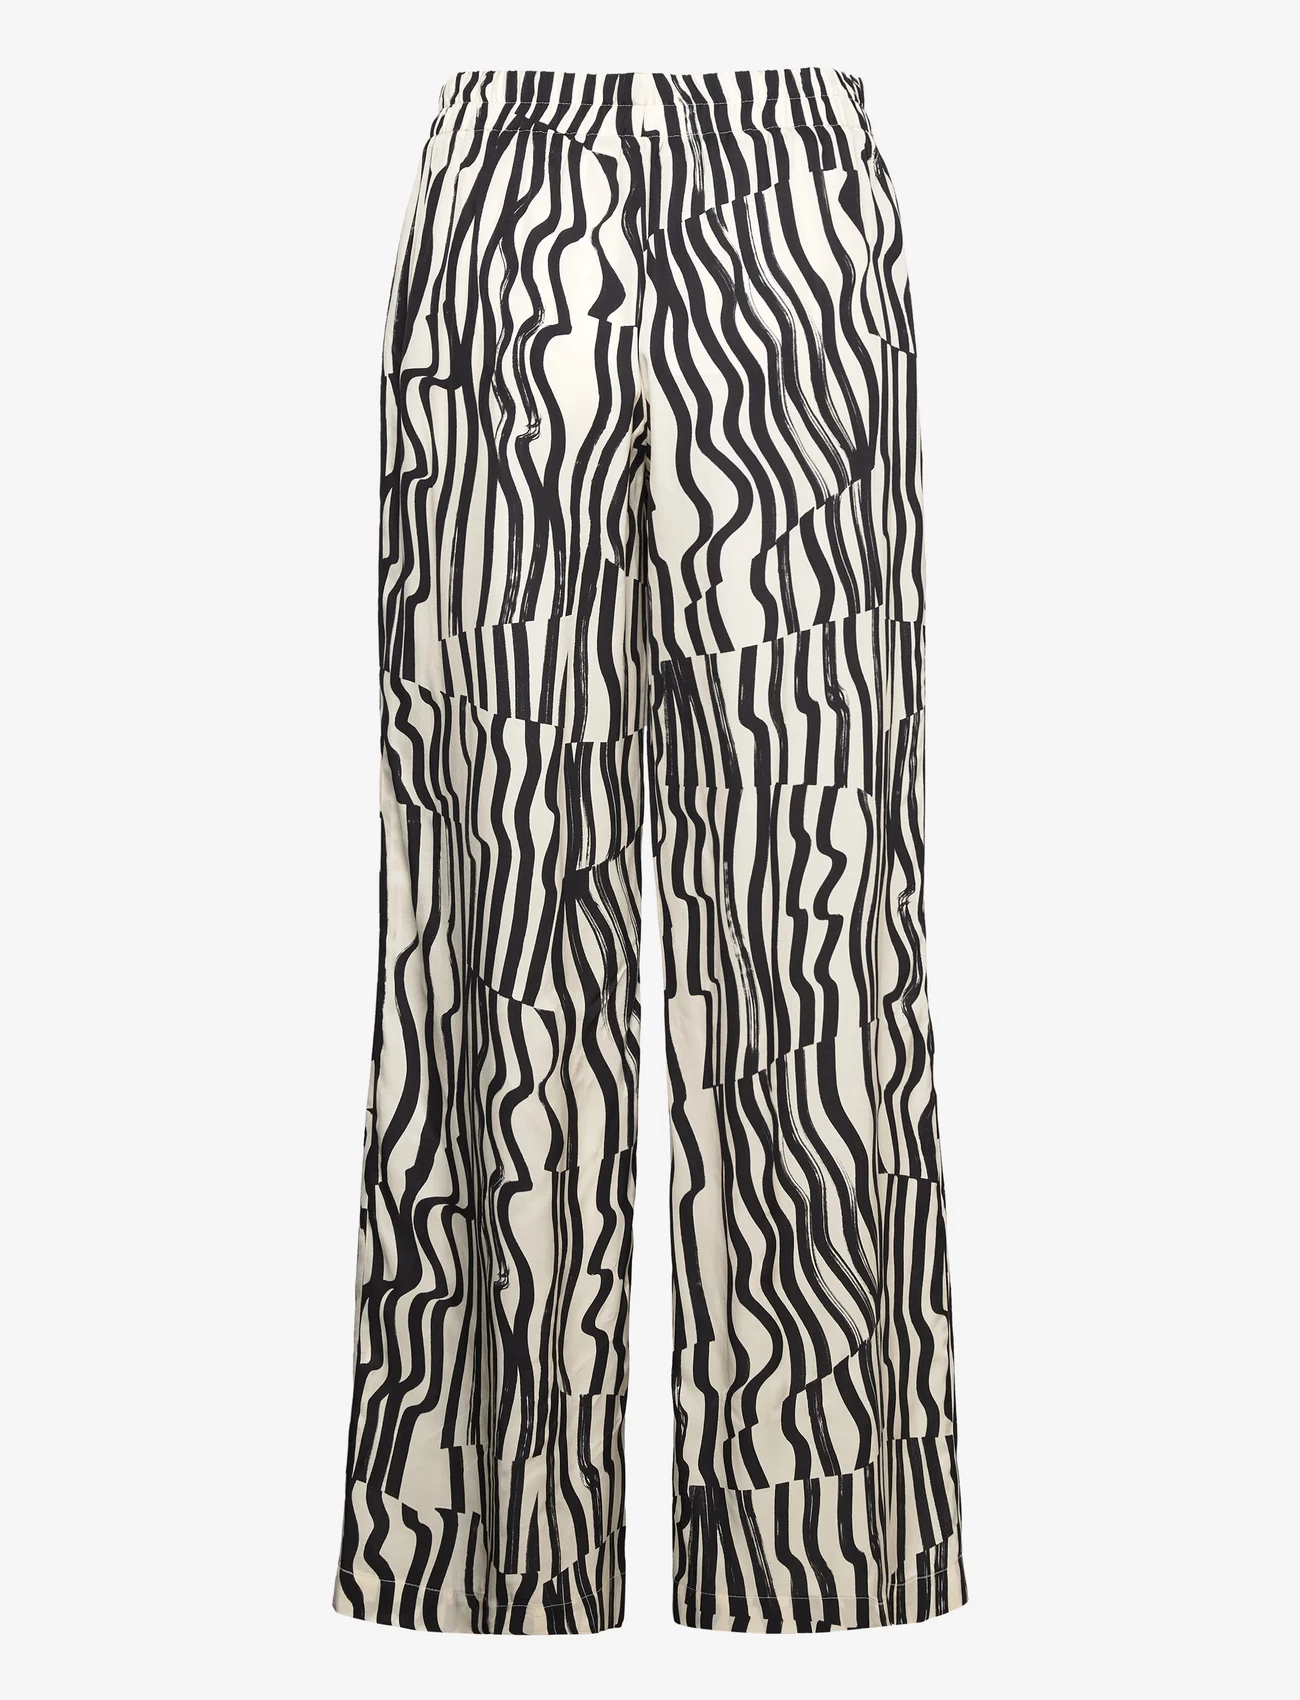 Andiata - Rochelle Print Trousers - feestelijke kleding voor outlet-prijzen - beige stripes - 1